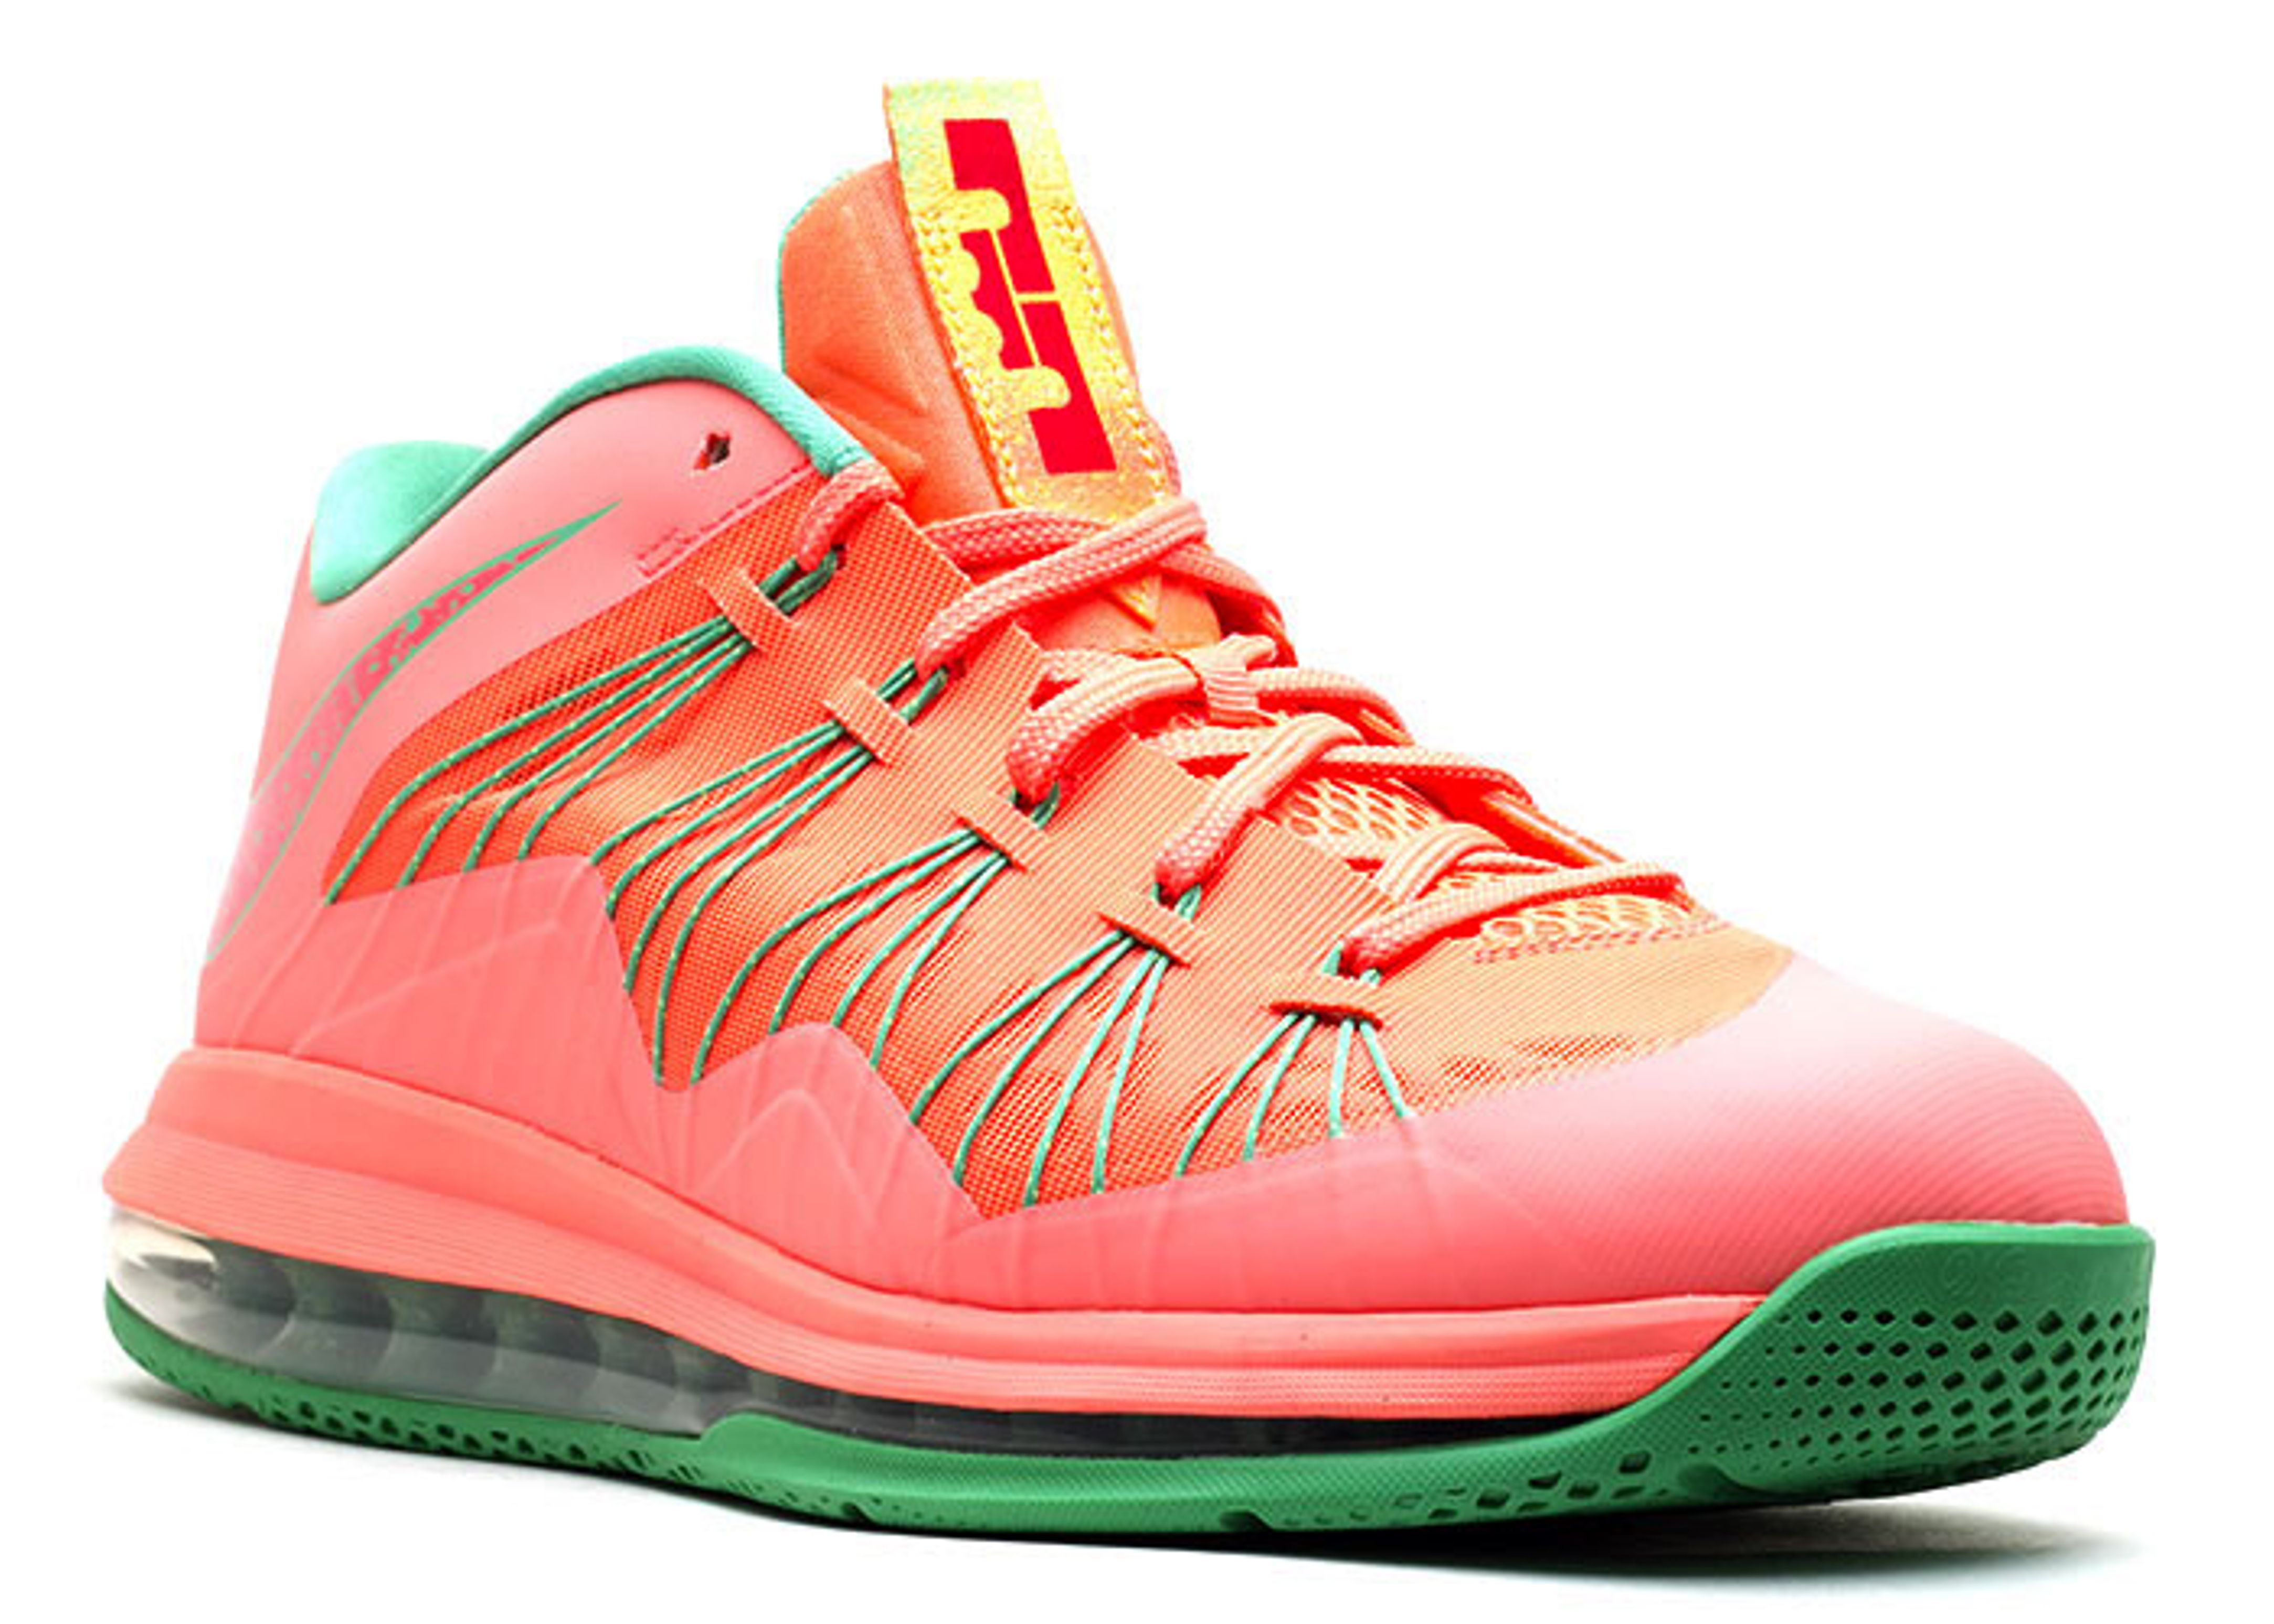 lebron watermelon shoes